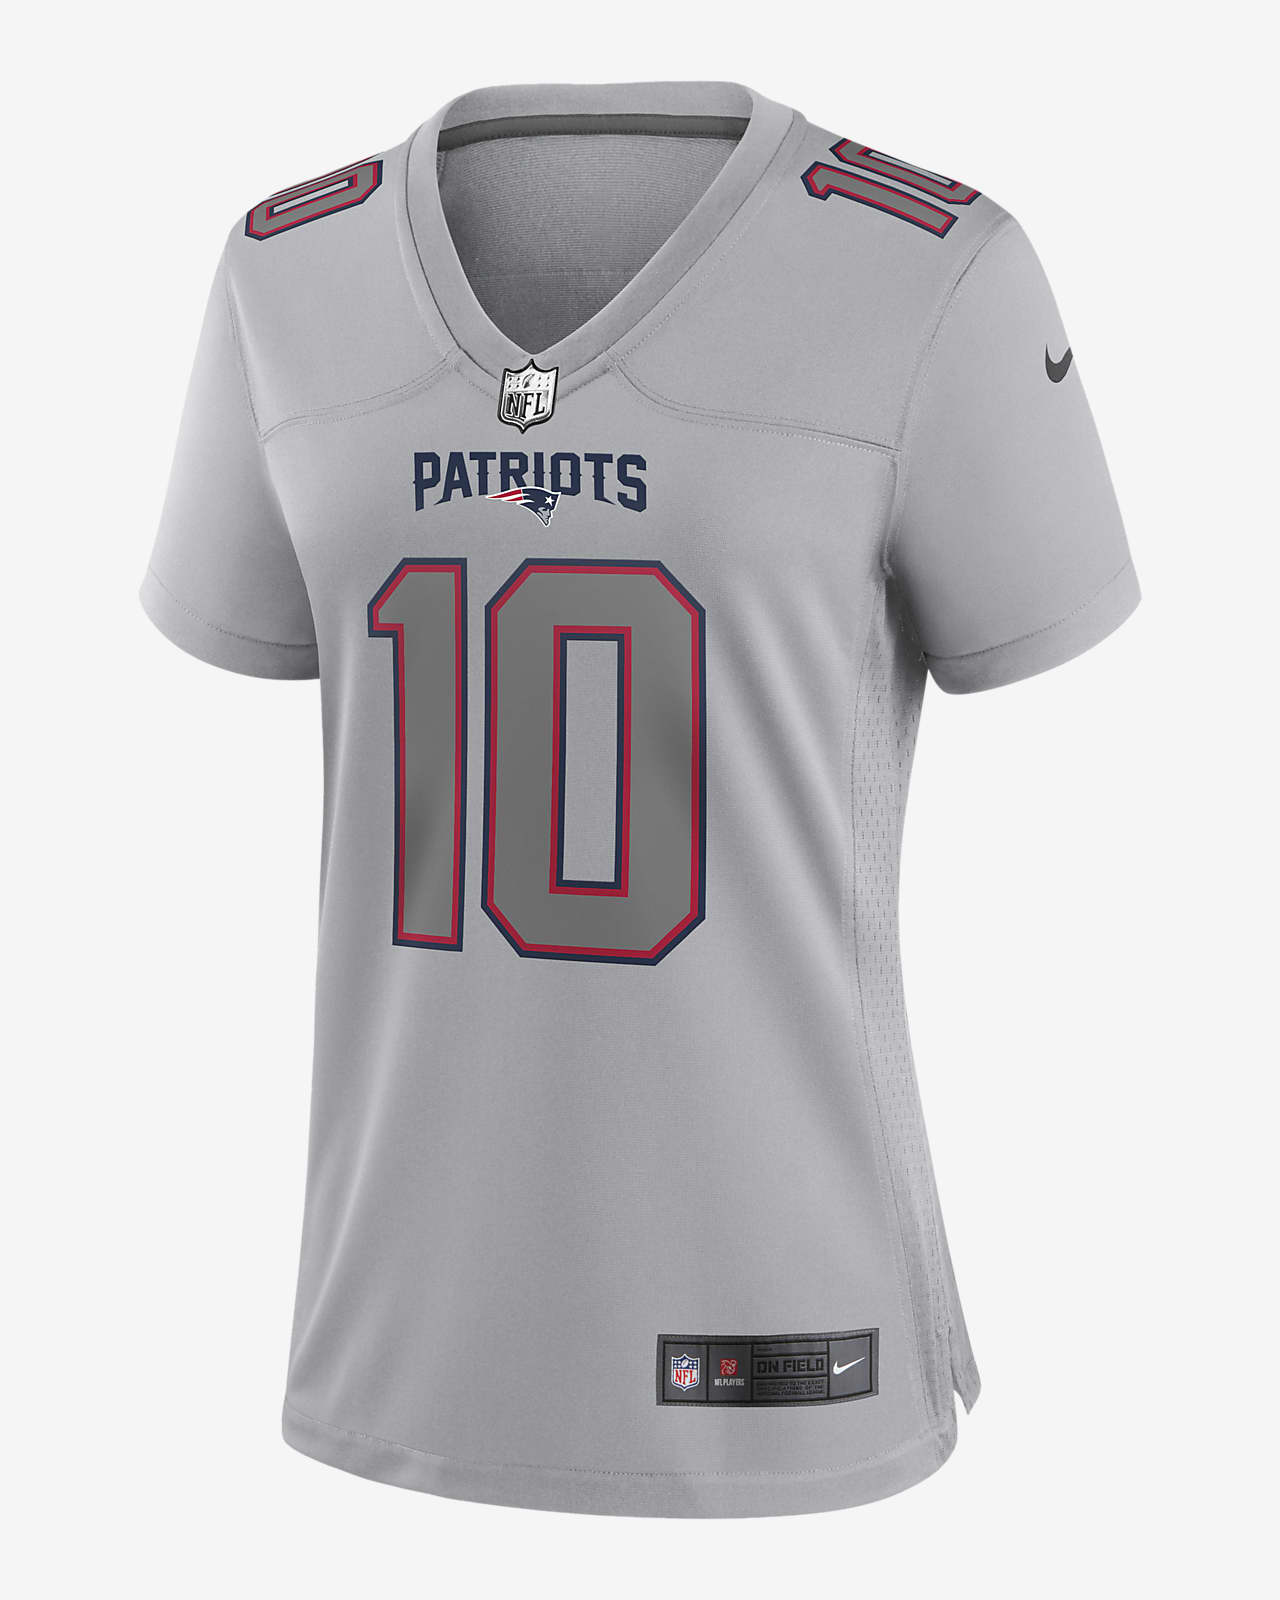 NFL New England Patriots Atmosphere (Mac Jones) Women's Fashion Football  Jersey.